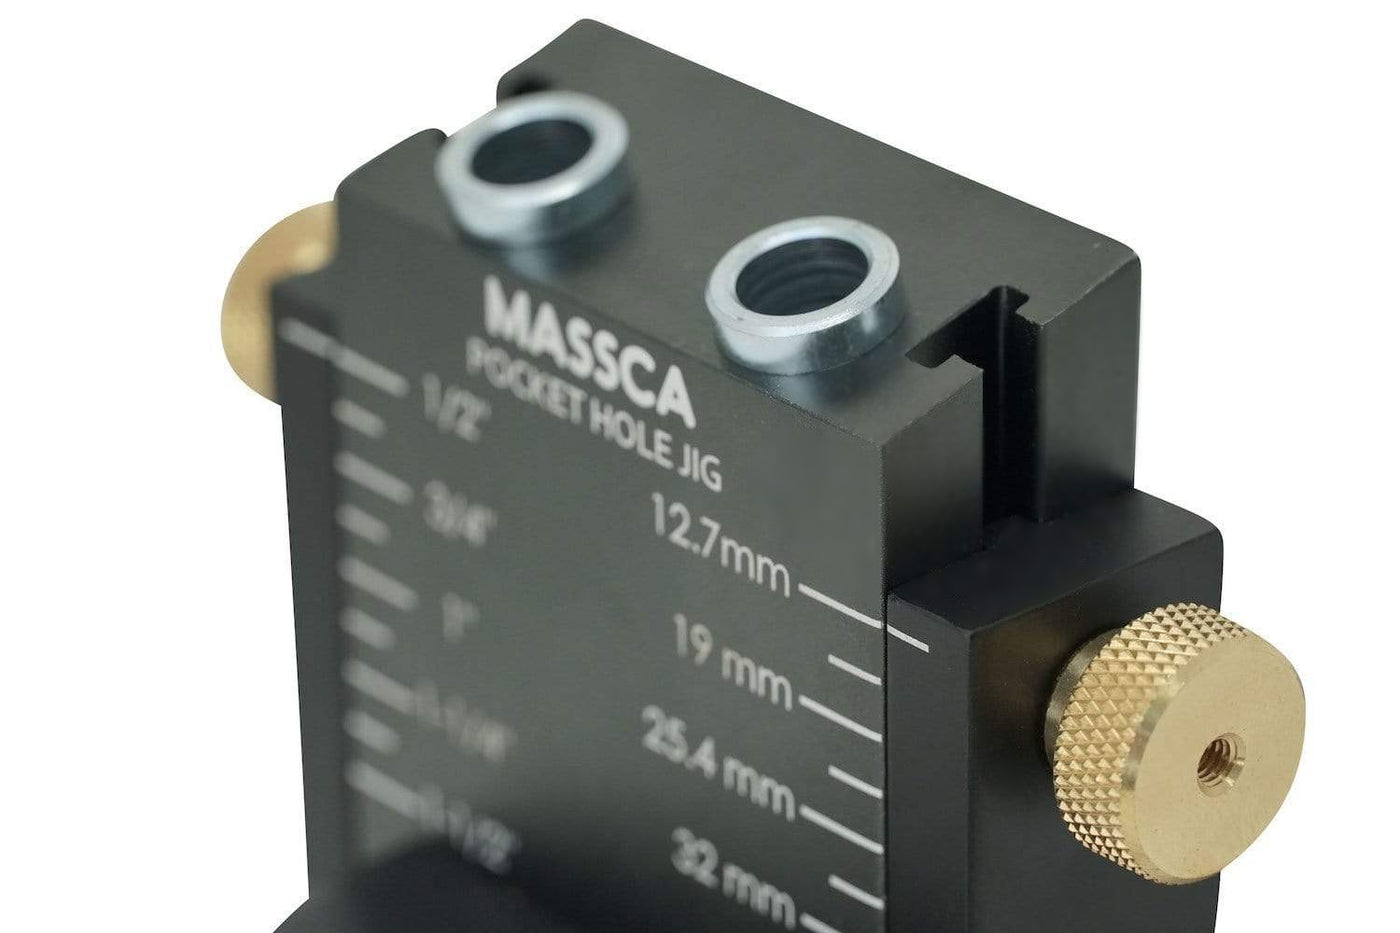 Massca M1 Aluminum Pocket Hole Jig System